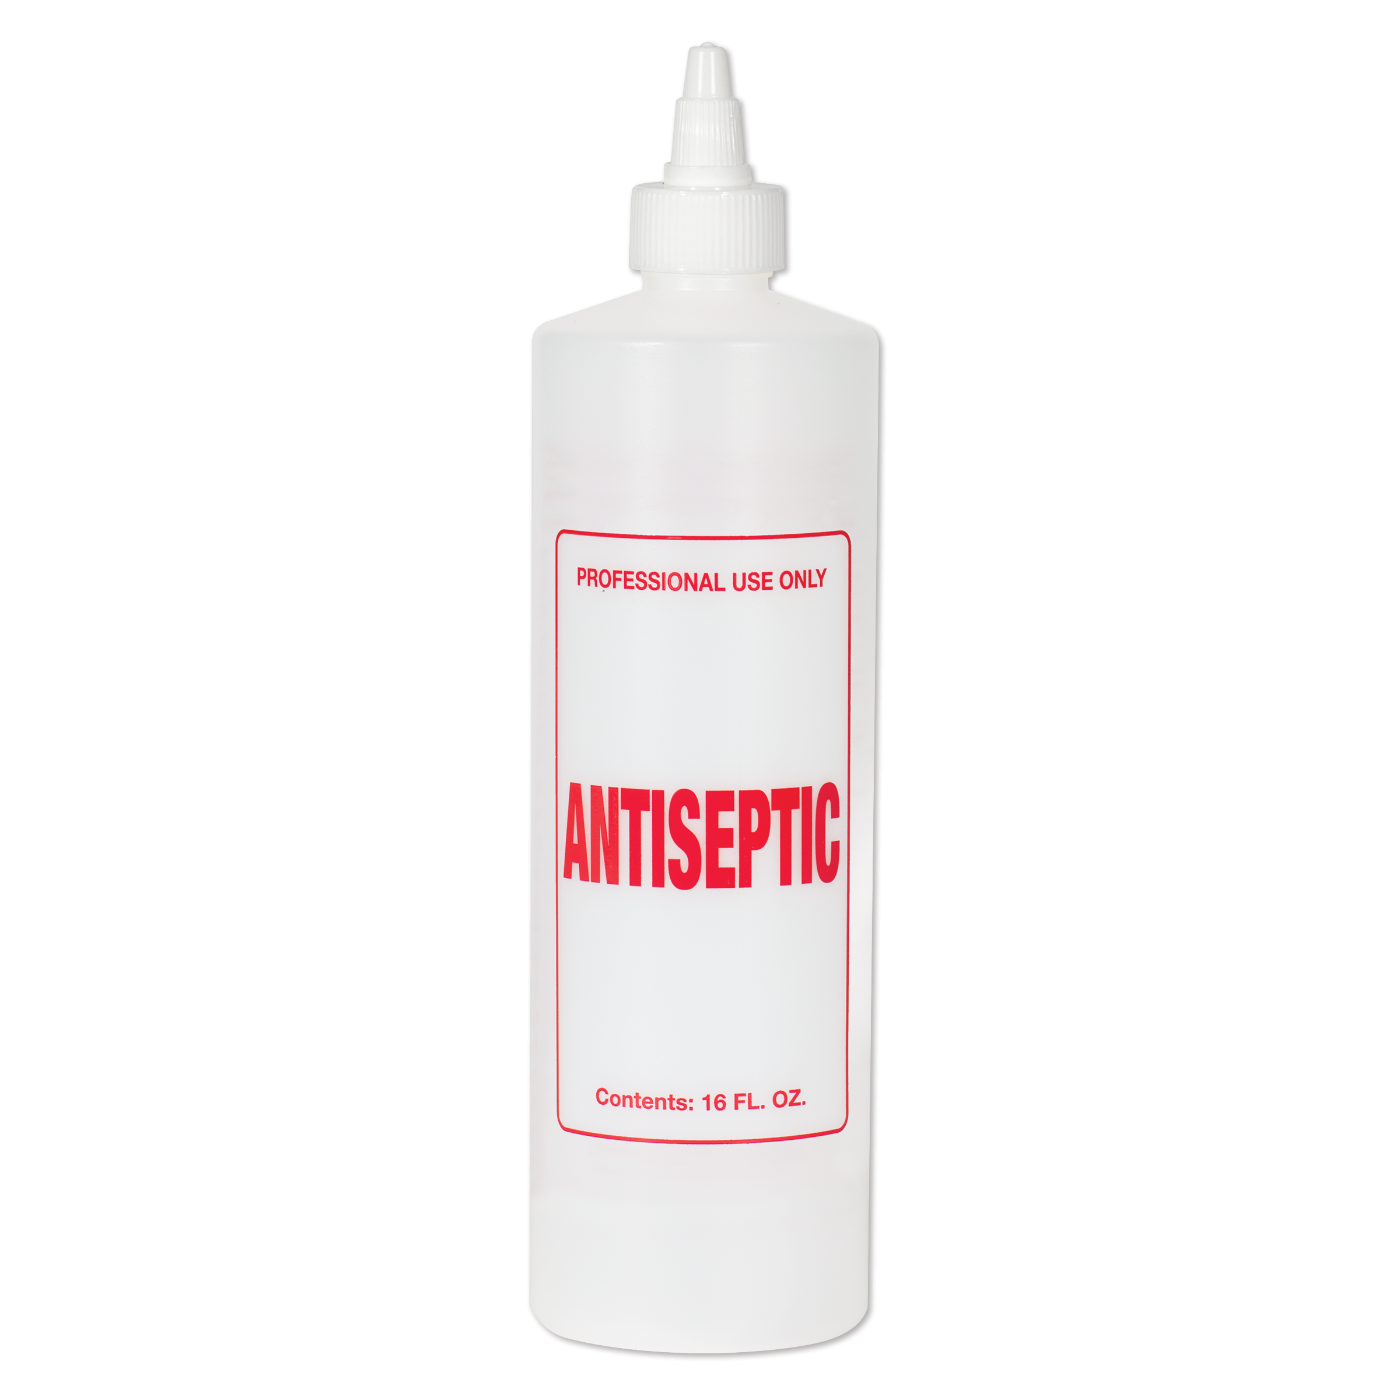 Imprinted Twist Top Bottle, Antiseptic, 16 oz.